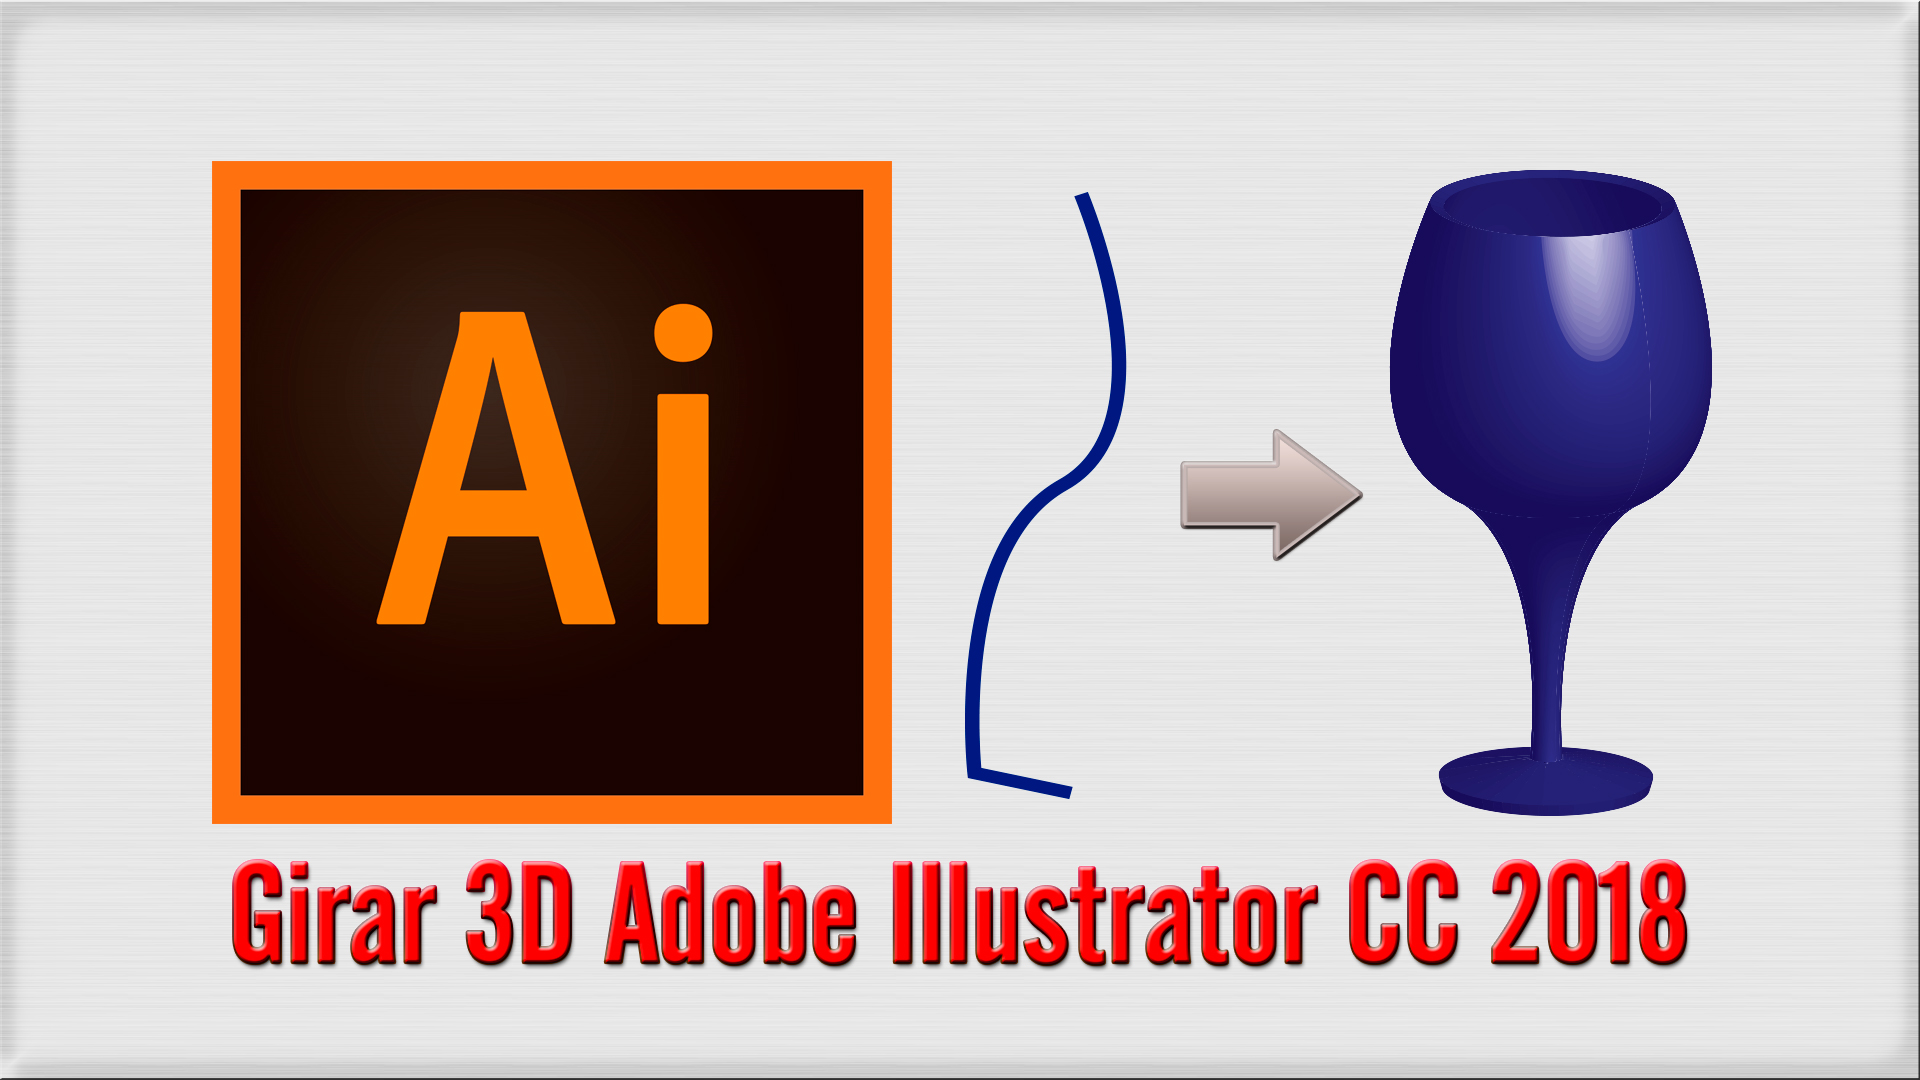 Videotutorial Adobe illustrator CC 2018: Cómo crear objetos 3D con girar (revolve)